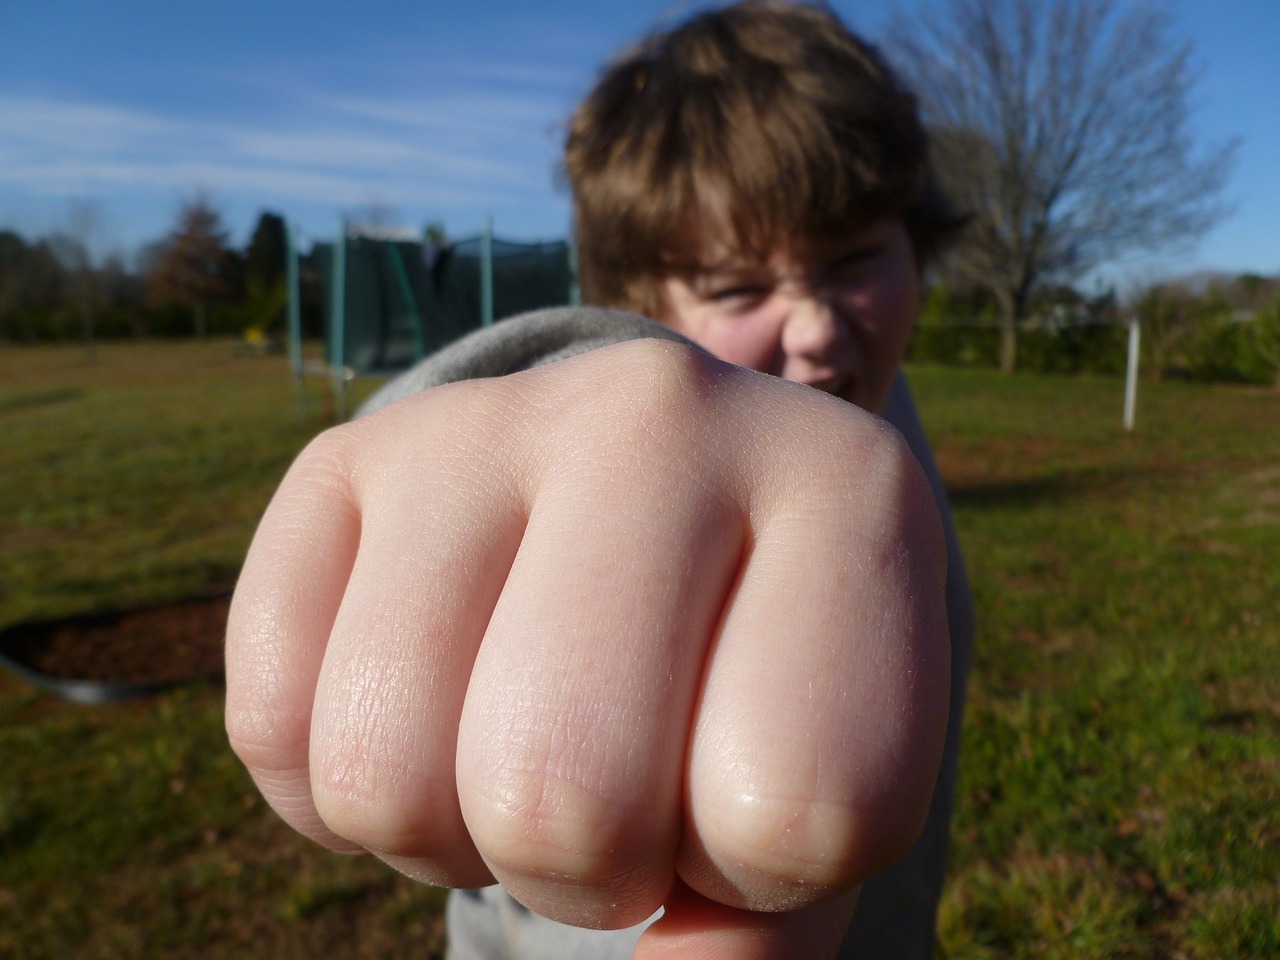 fist bump boy outside free photo